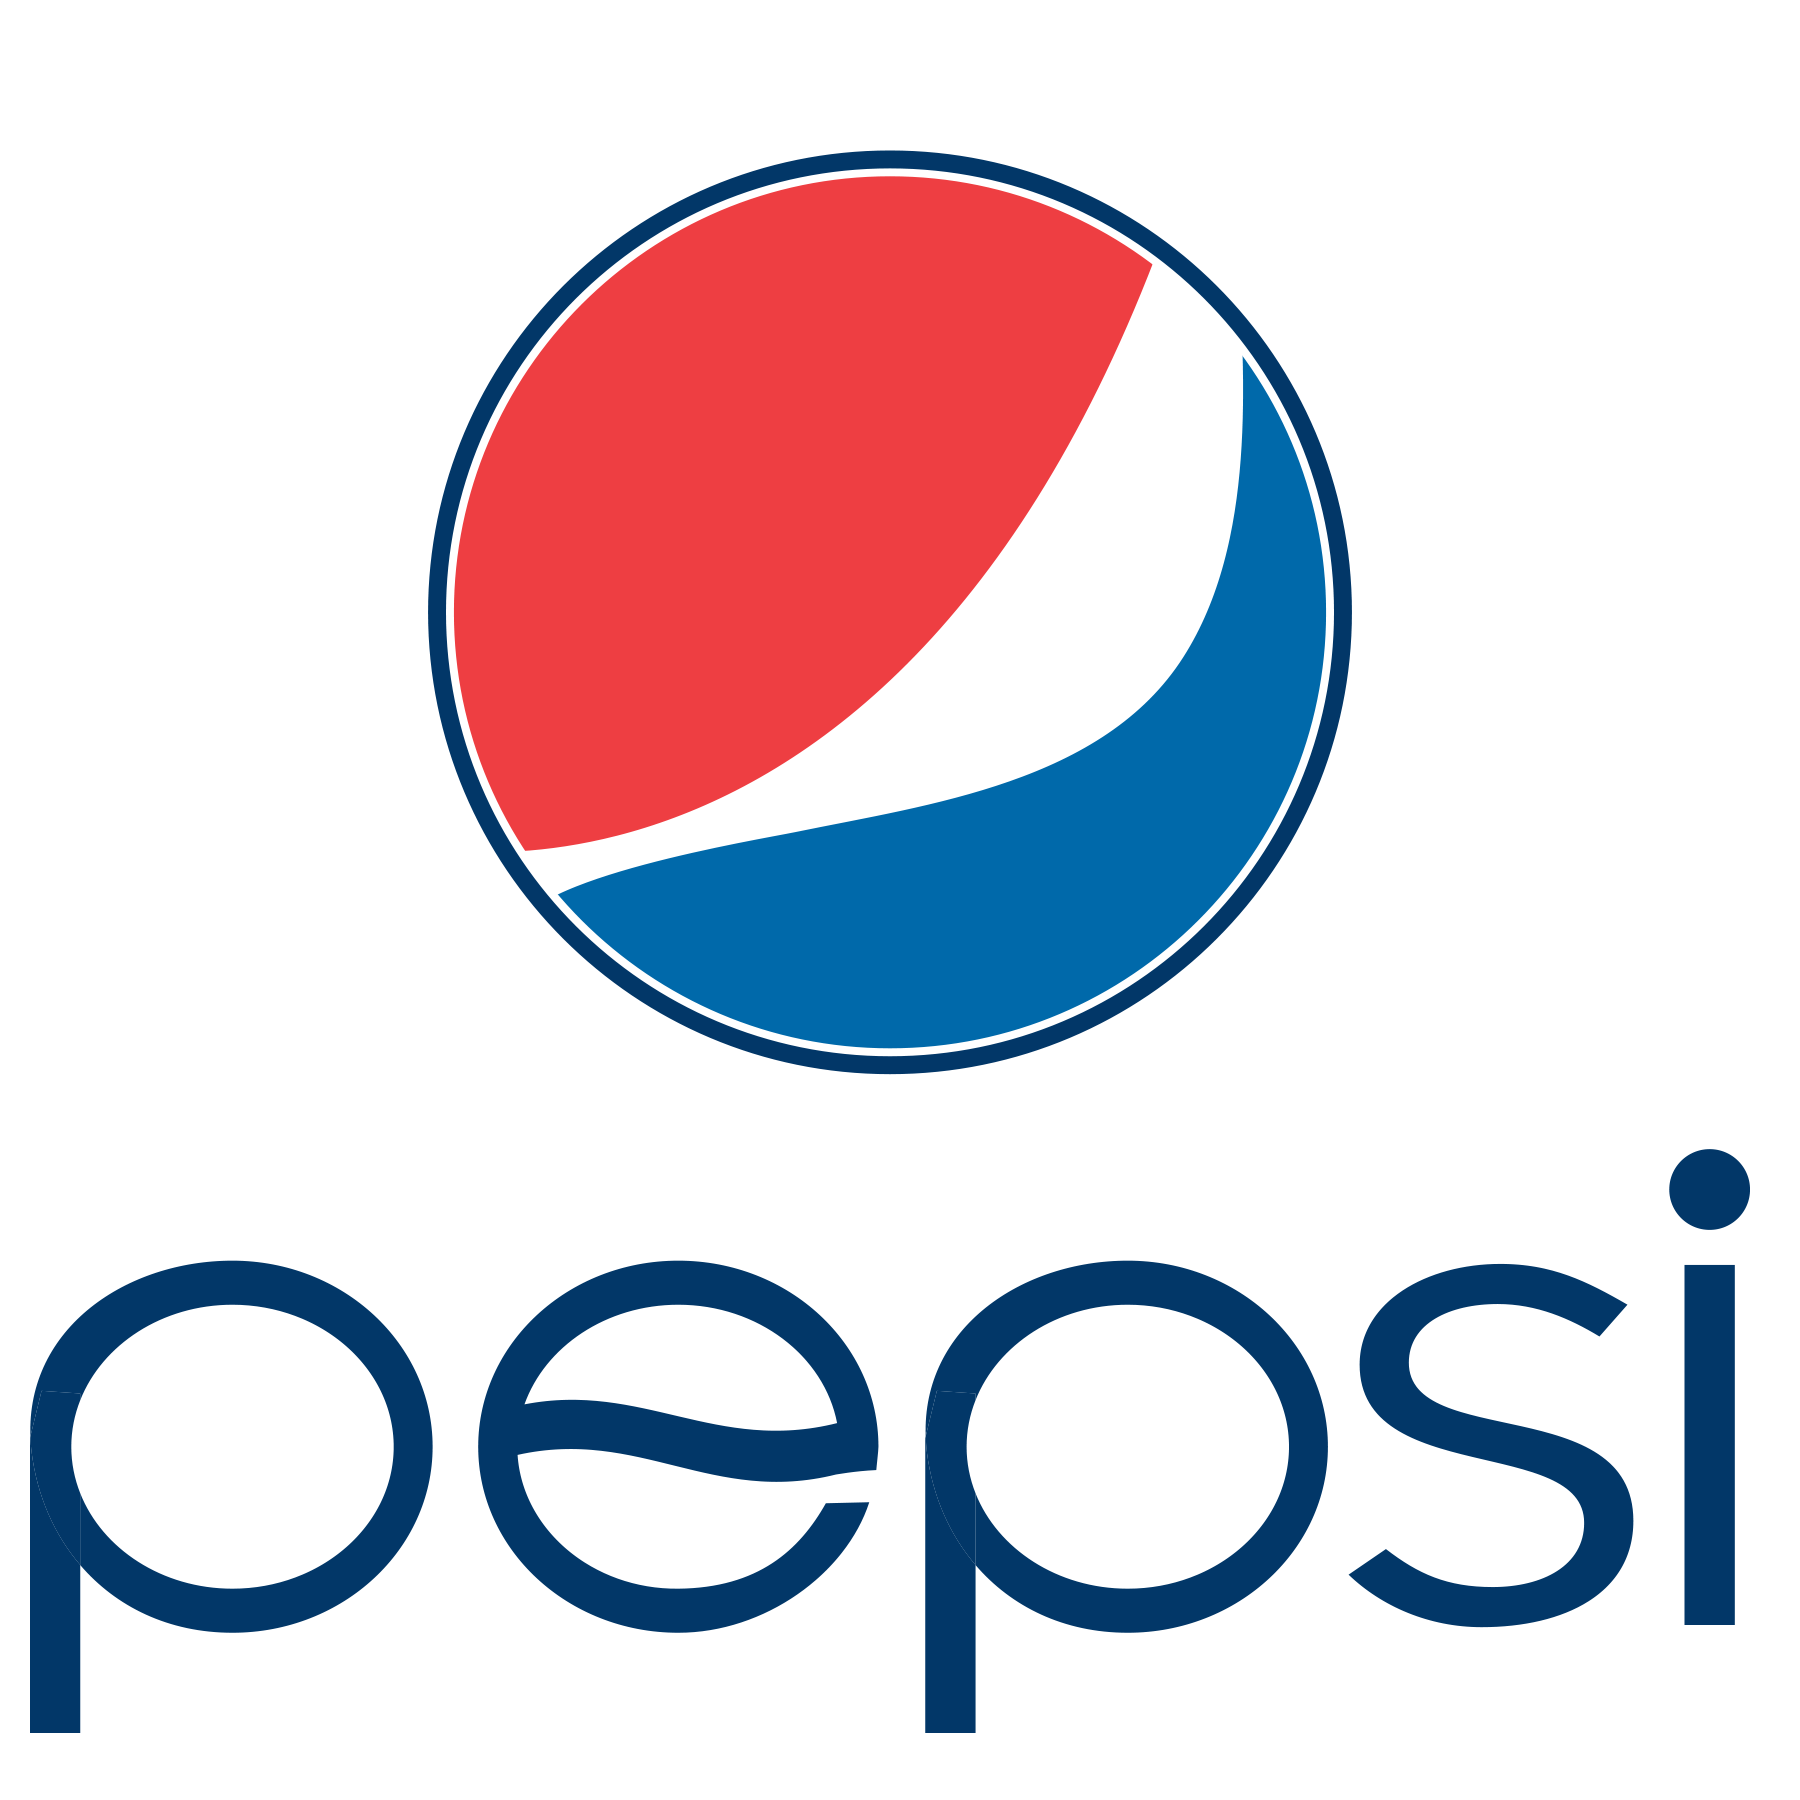 Pepsi has a new logo | CNN Business